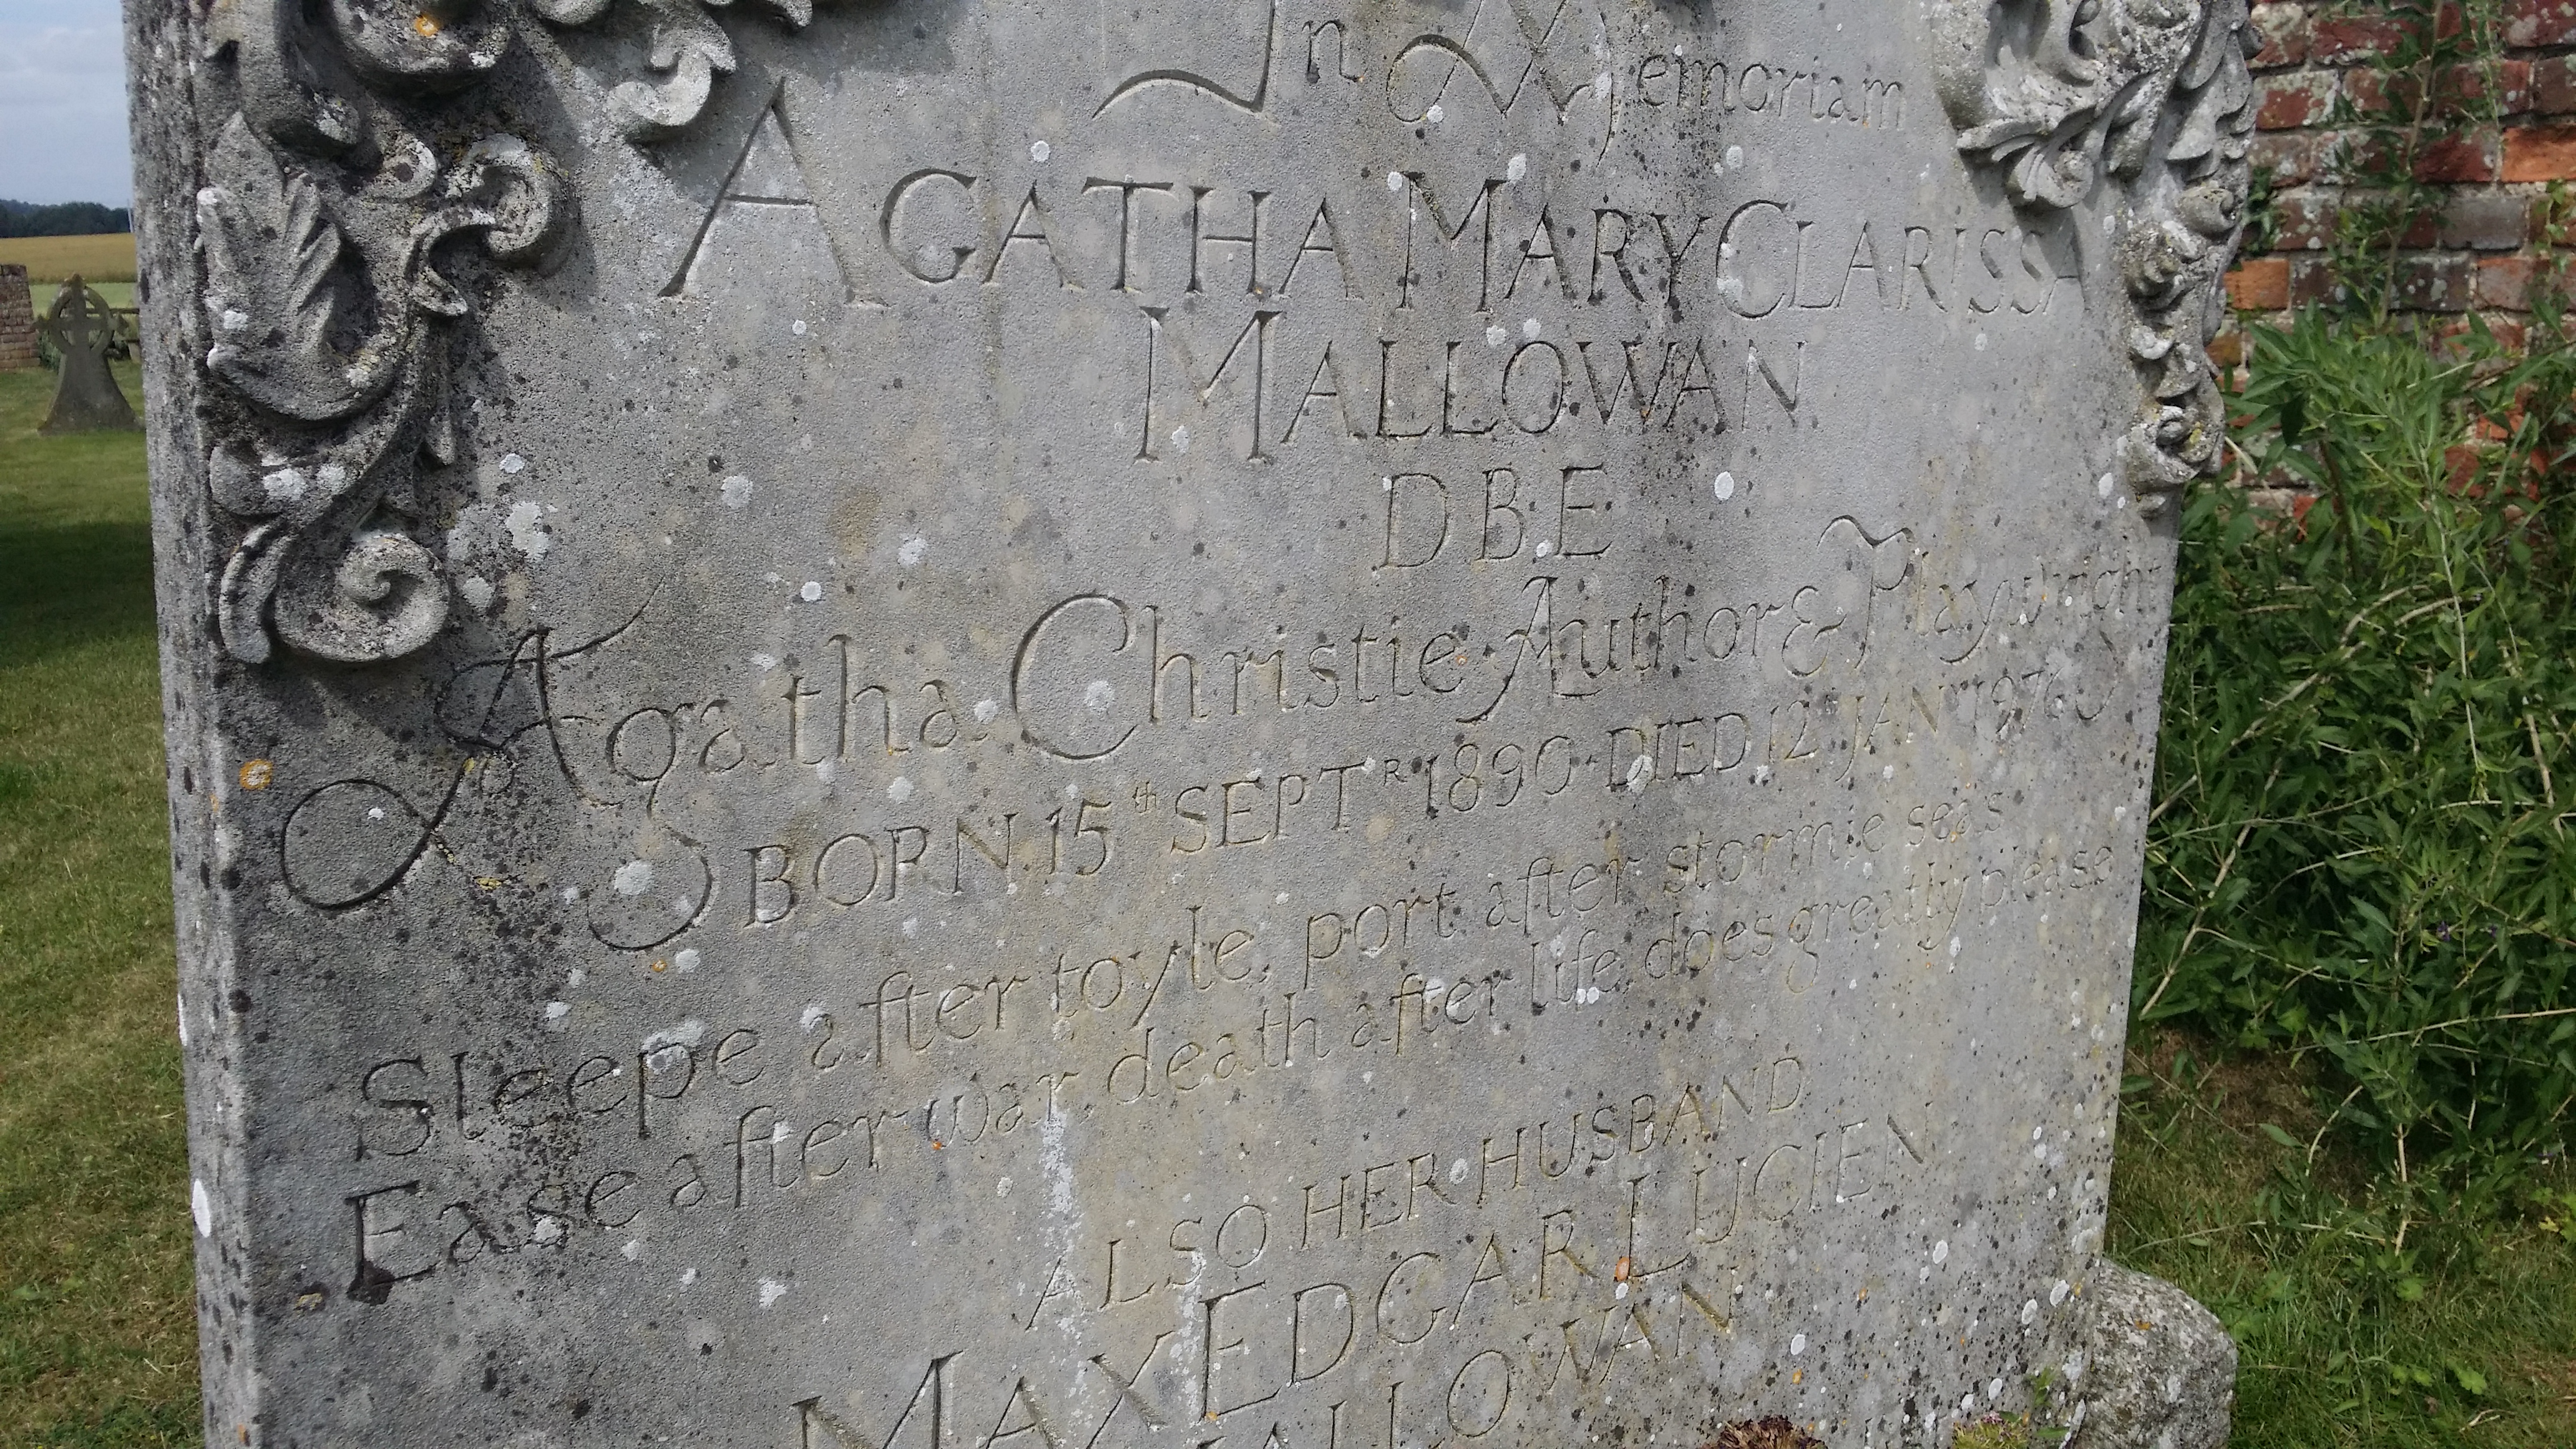 Agatha Christie's grave